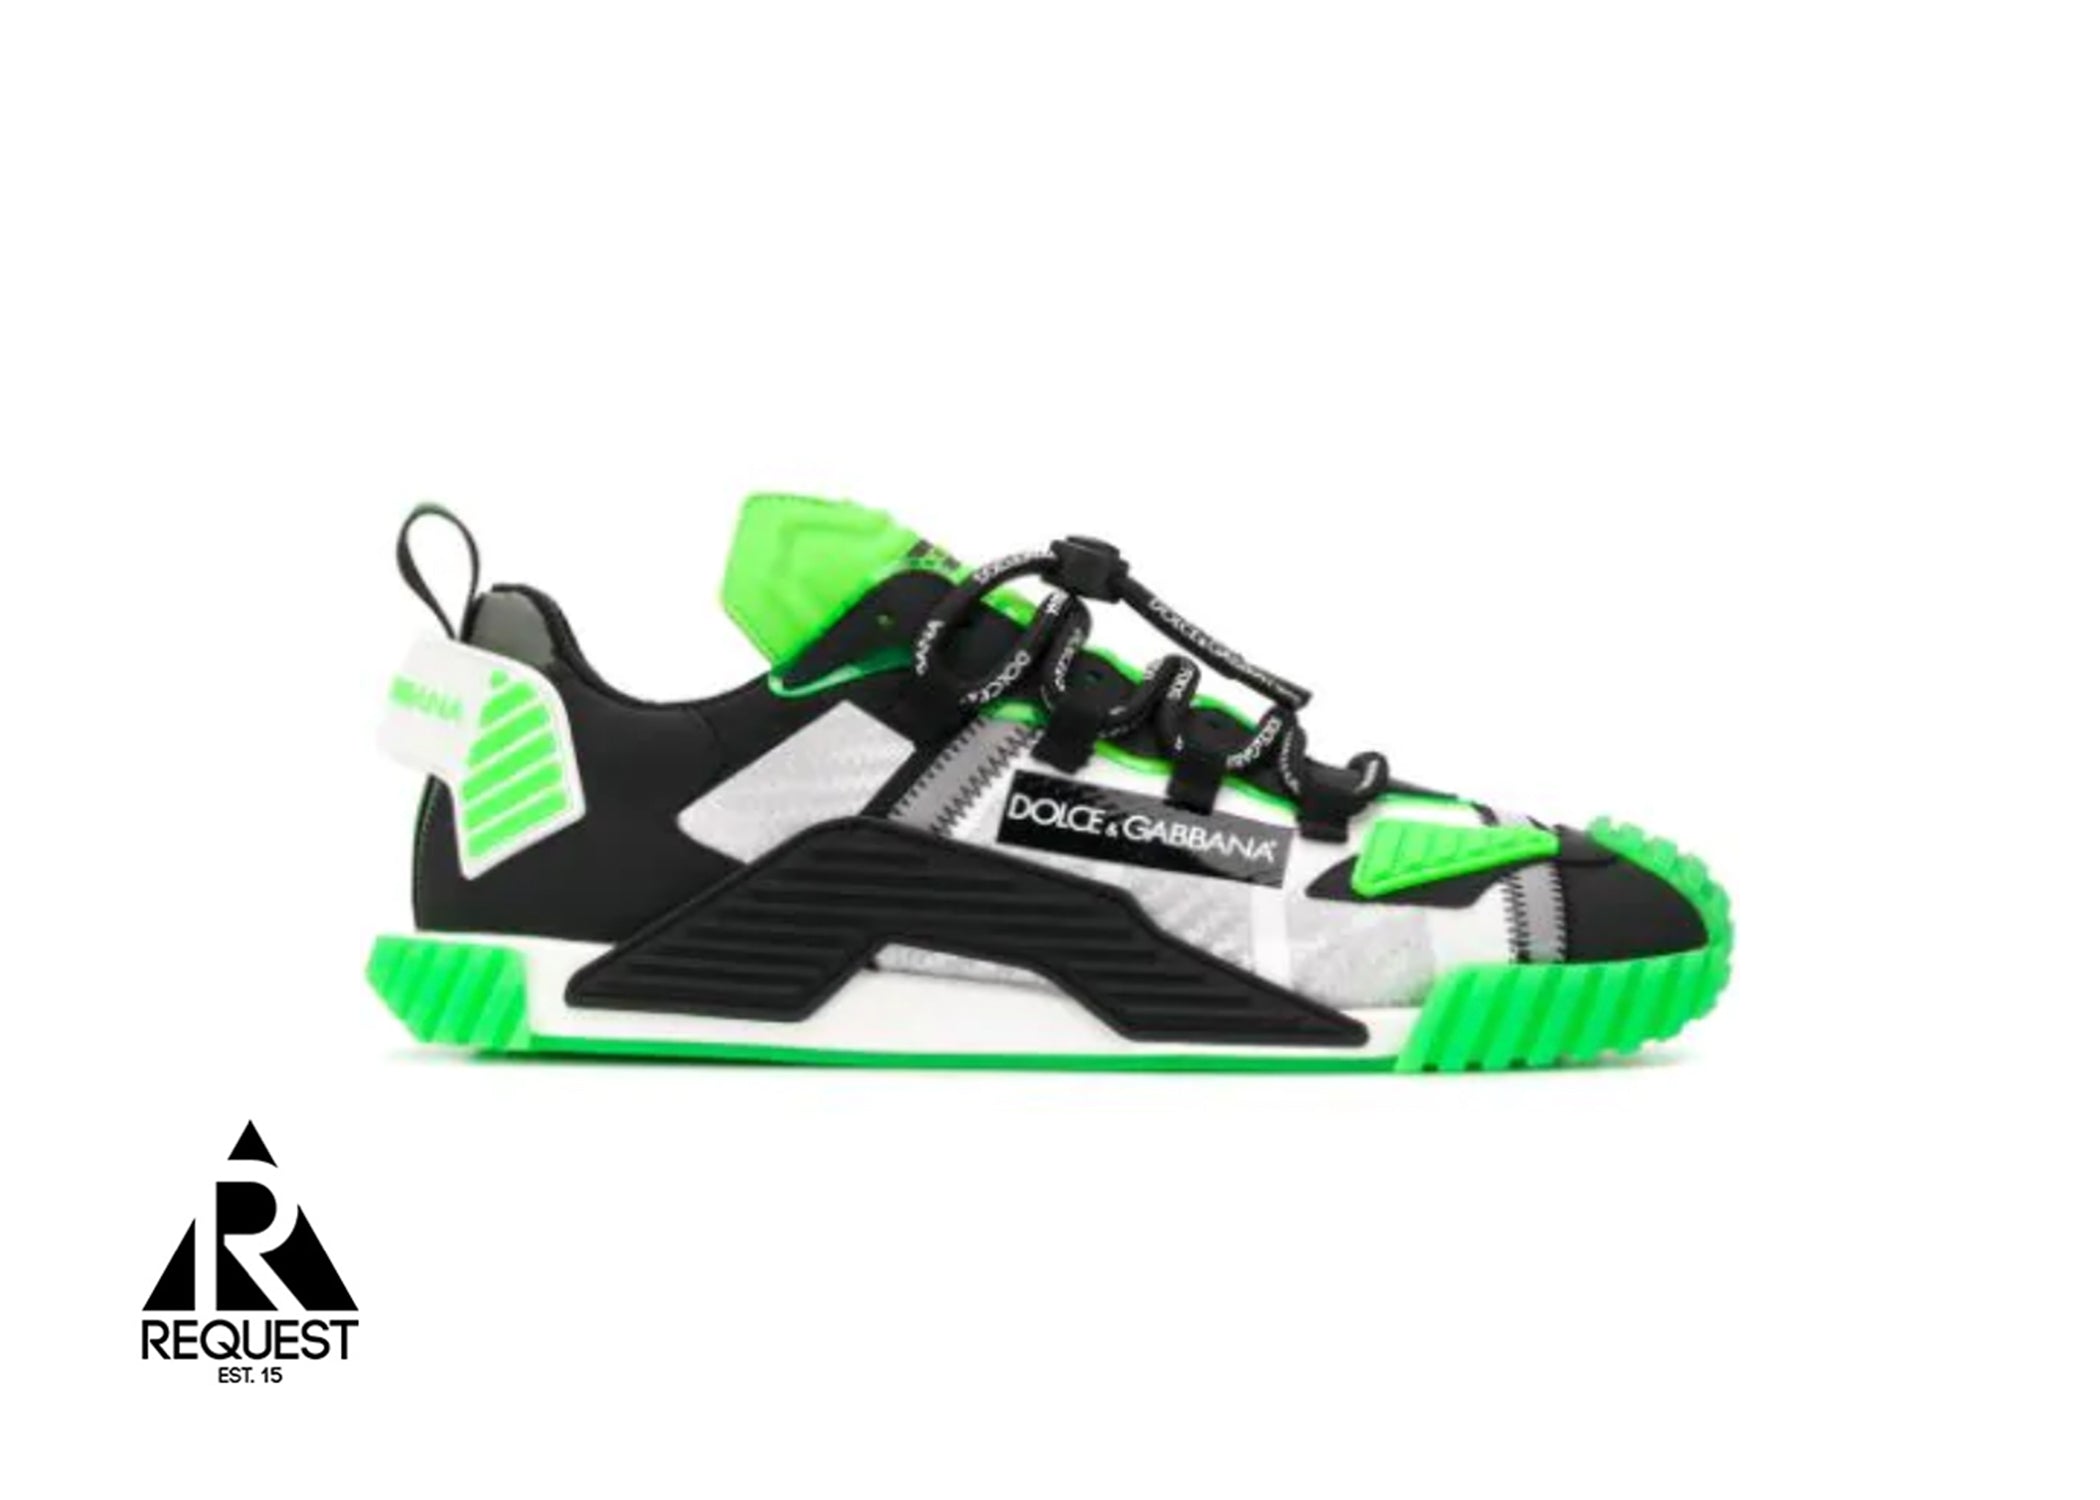 Dolce & Gabbana NS1 Sneaker “Black Green”